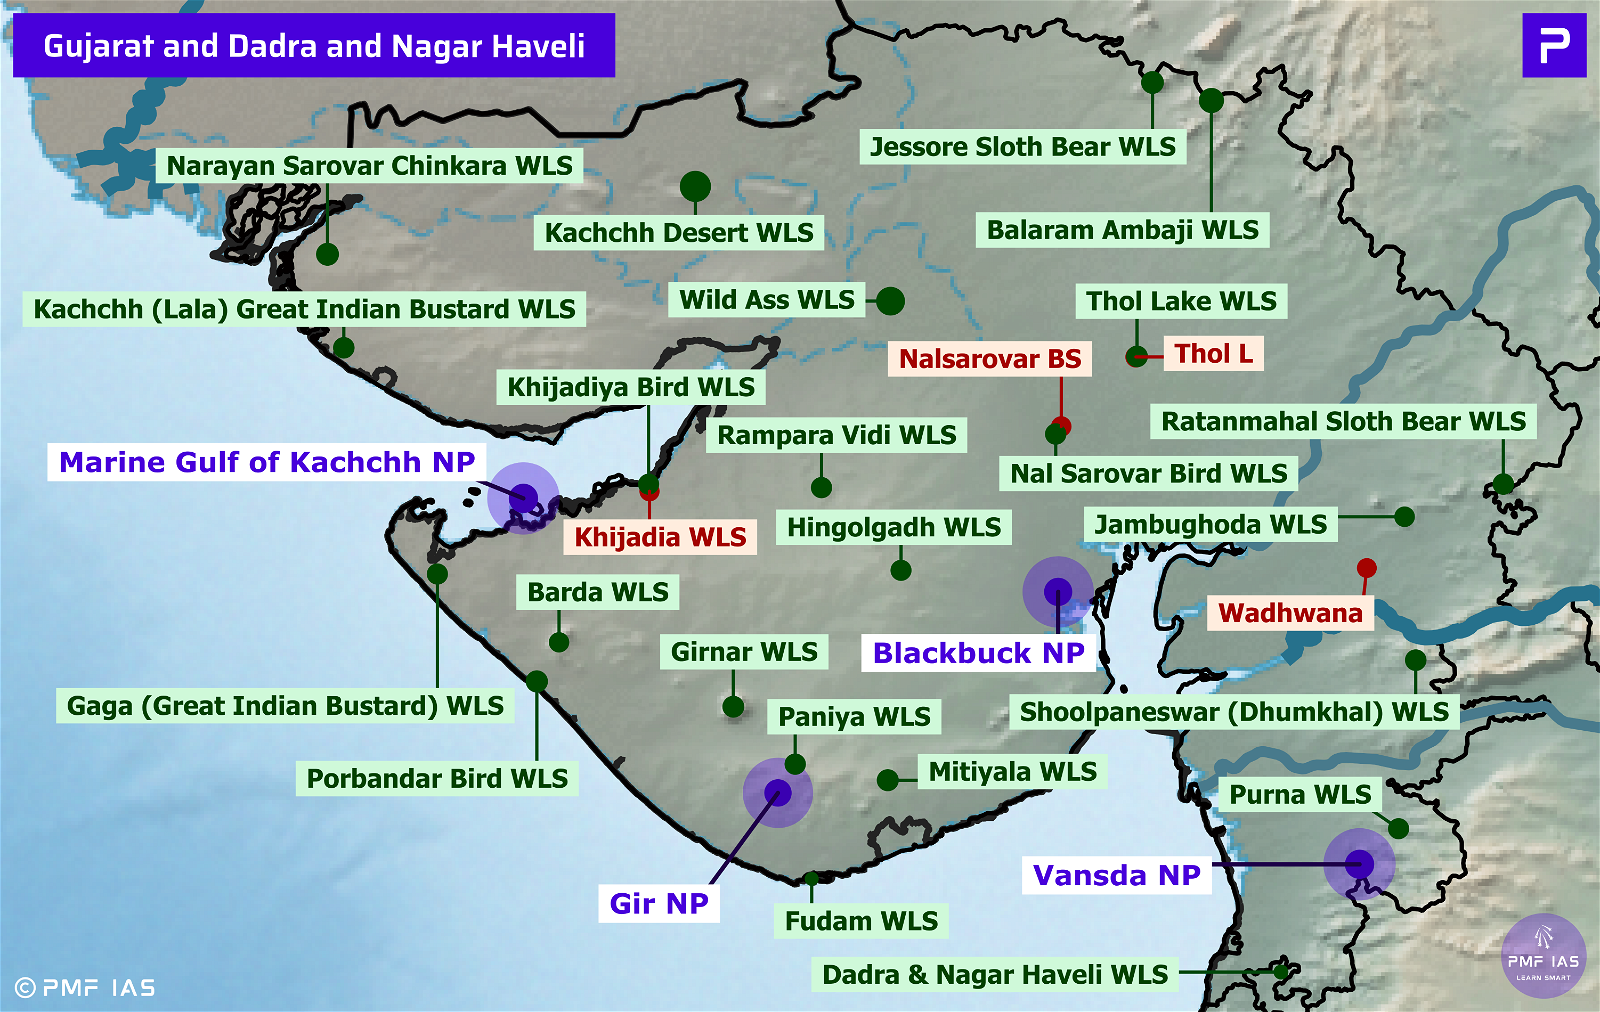 Wildlife Sanctuaries, National Parks in Gujarat and Dadra and Nagar Havelii